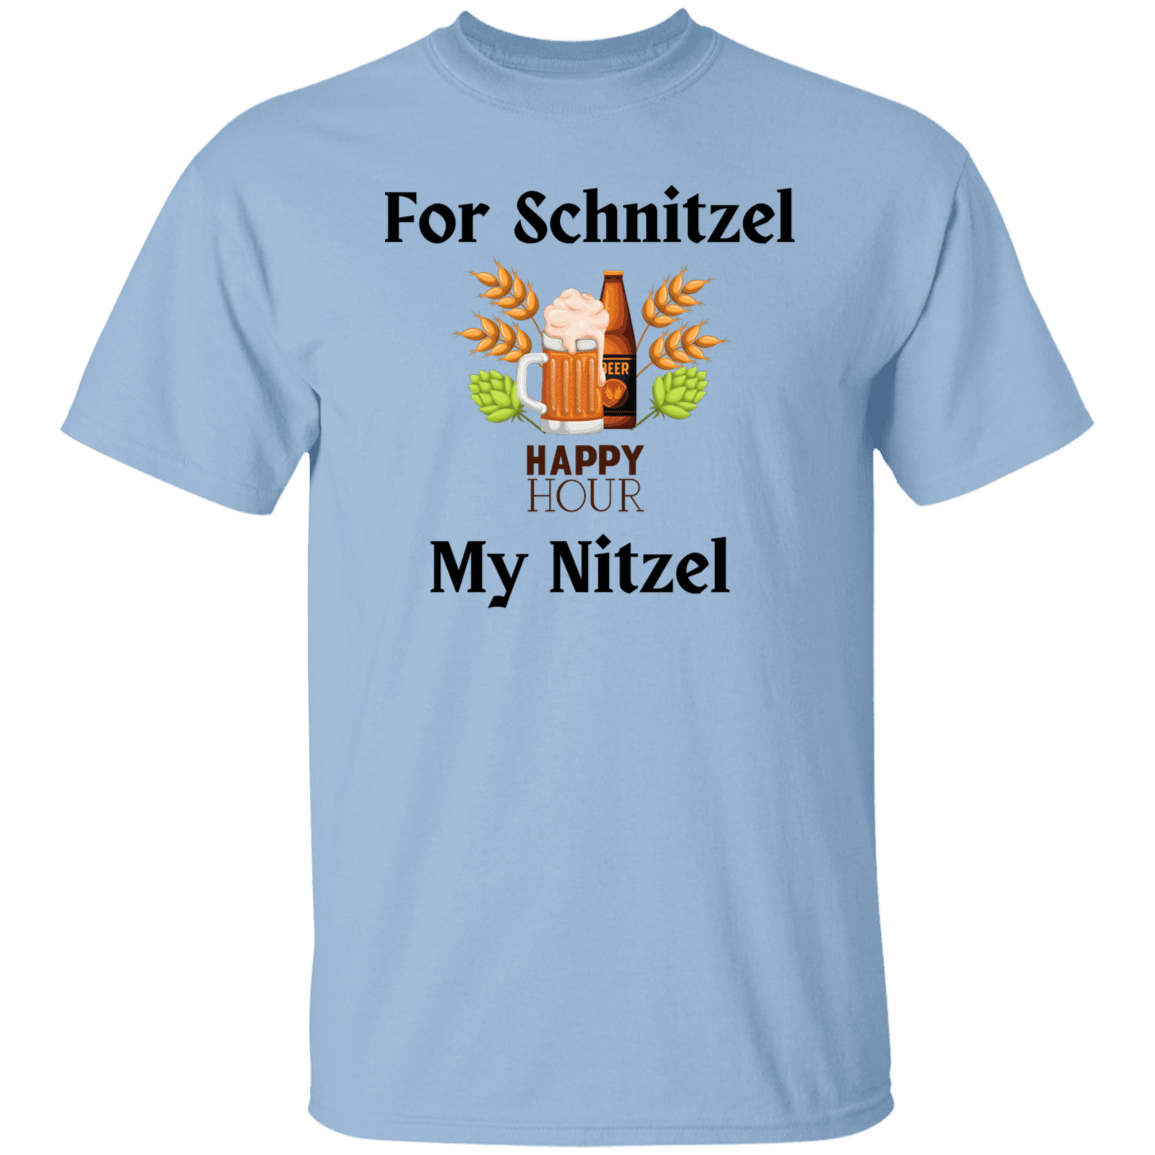 For Schnitizel  T-Shirt